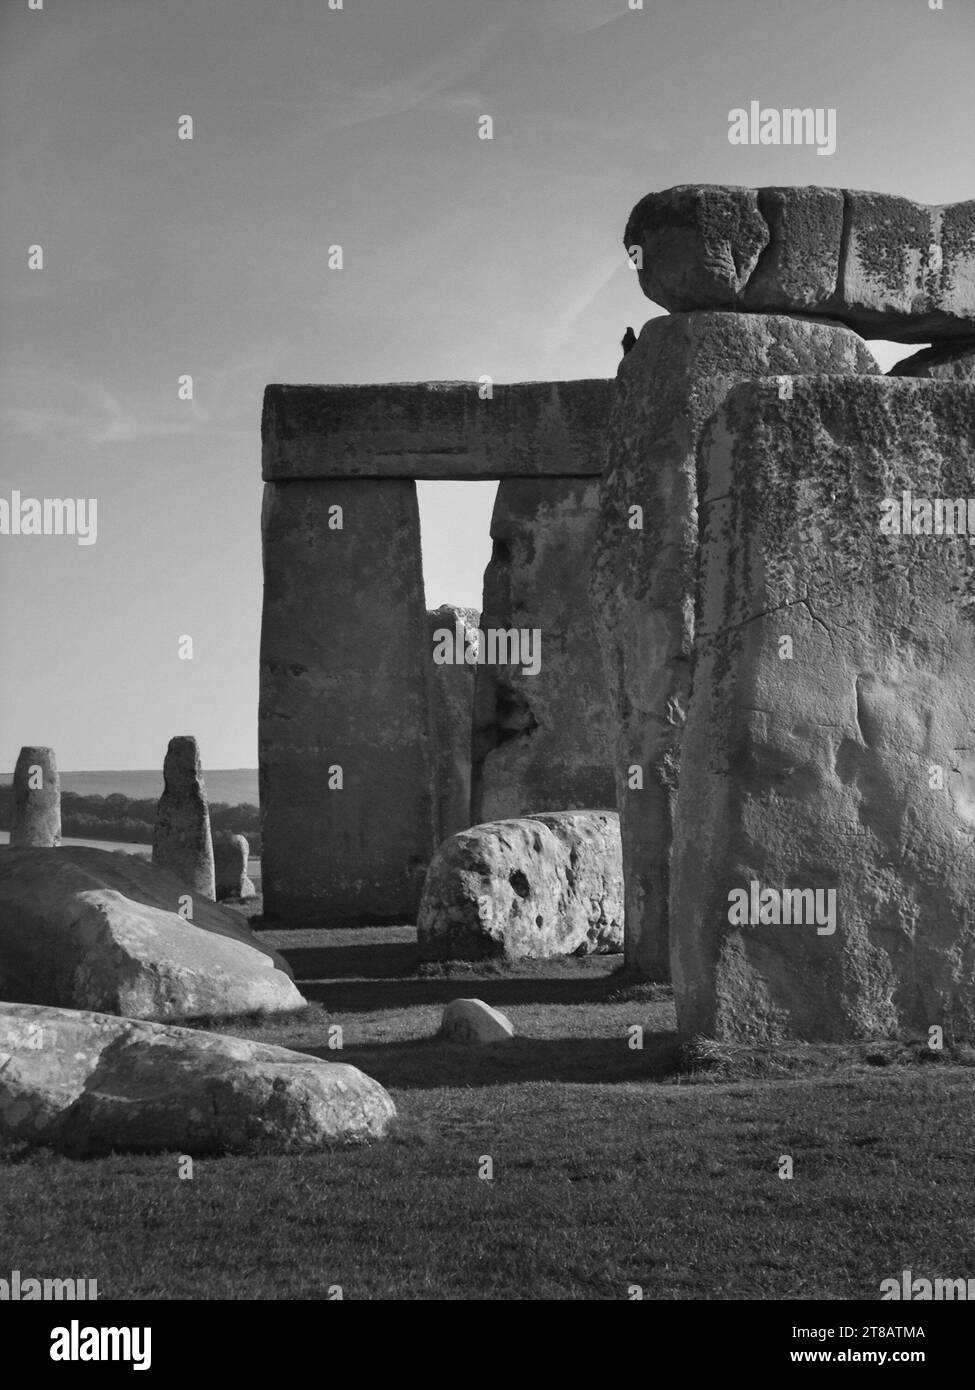 Stonehenge, Neolithic ancient standing stones, stone circle monument.  Wiltshire, England, United Kingdom.  Monochrome image. Stock Photo